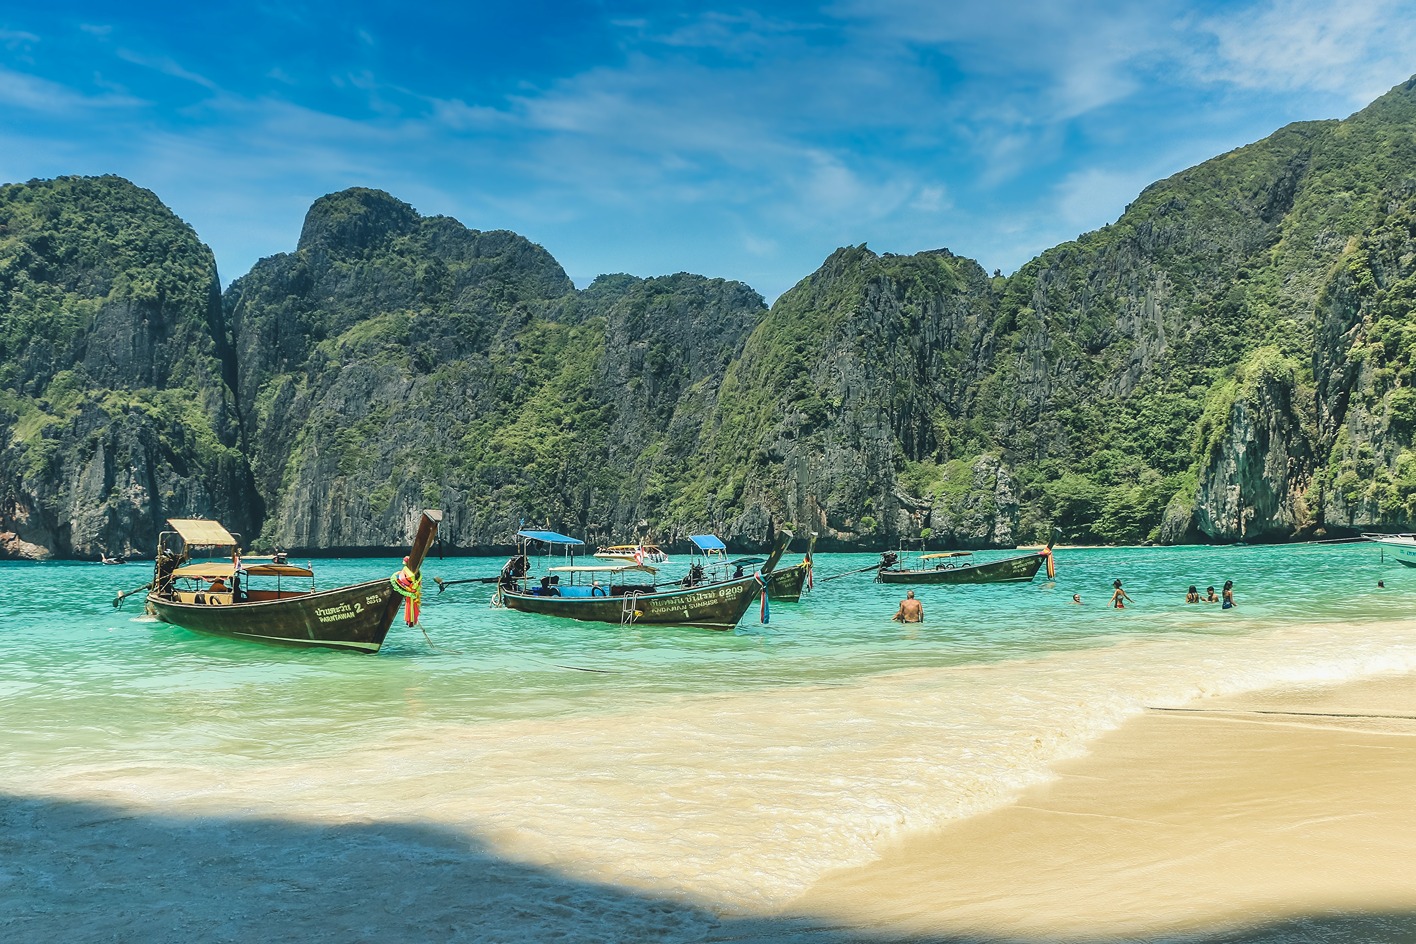 Thai wooden boats along the shore in Coastal Thailand